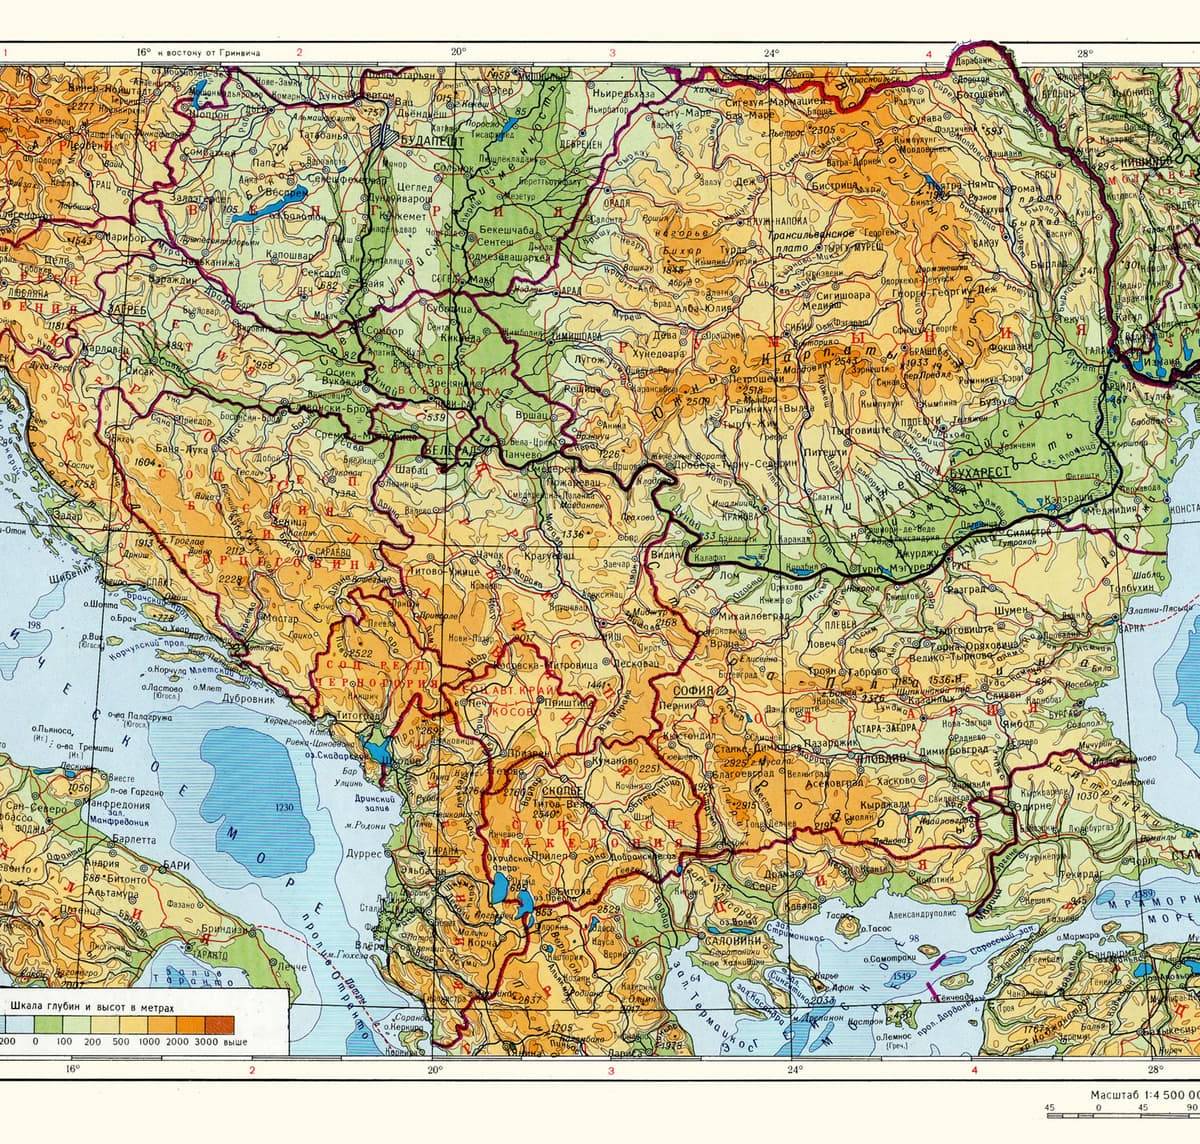 Pobjeda (Черногория): Как Москва влияет на Балканы